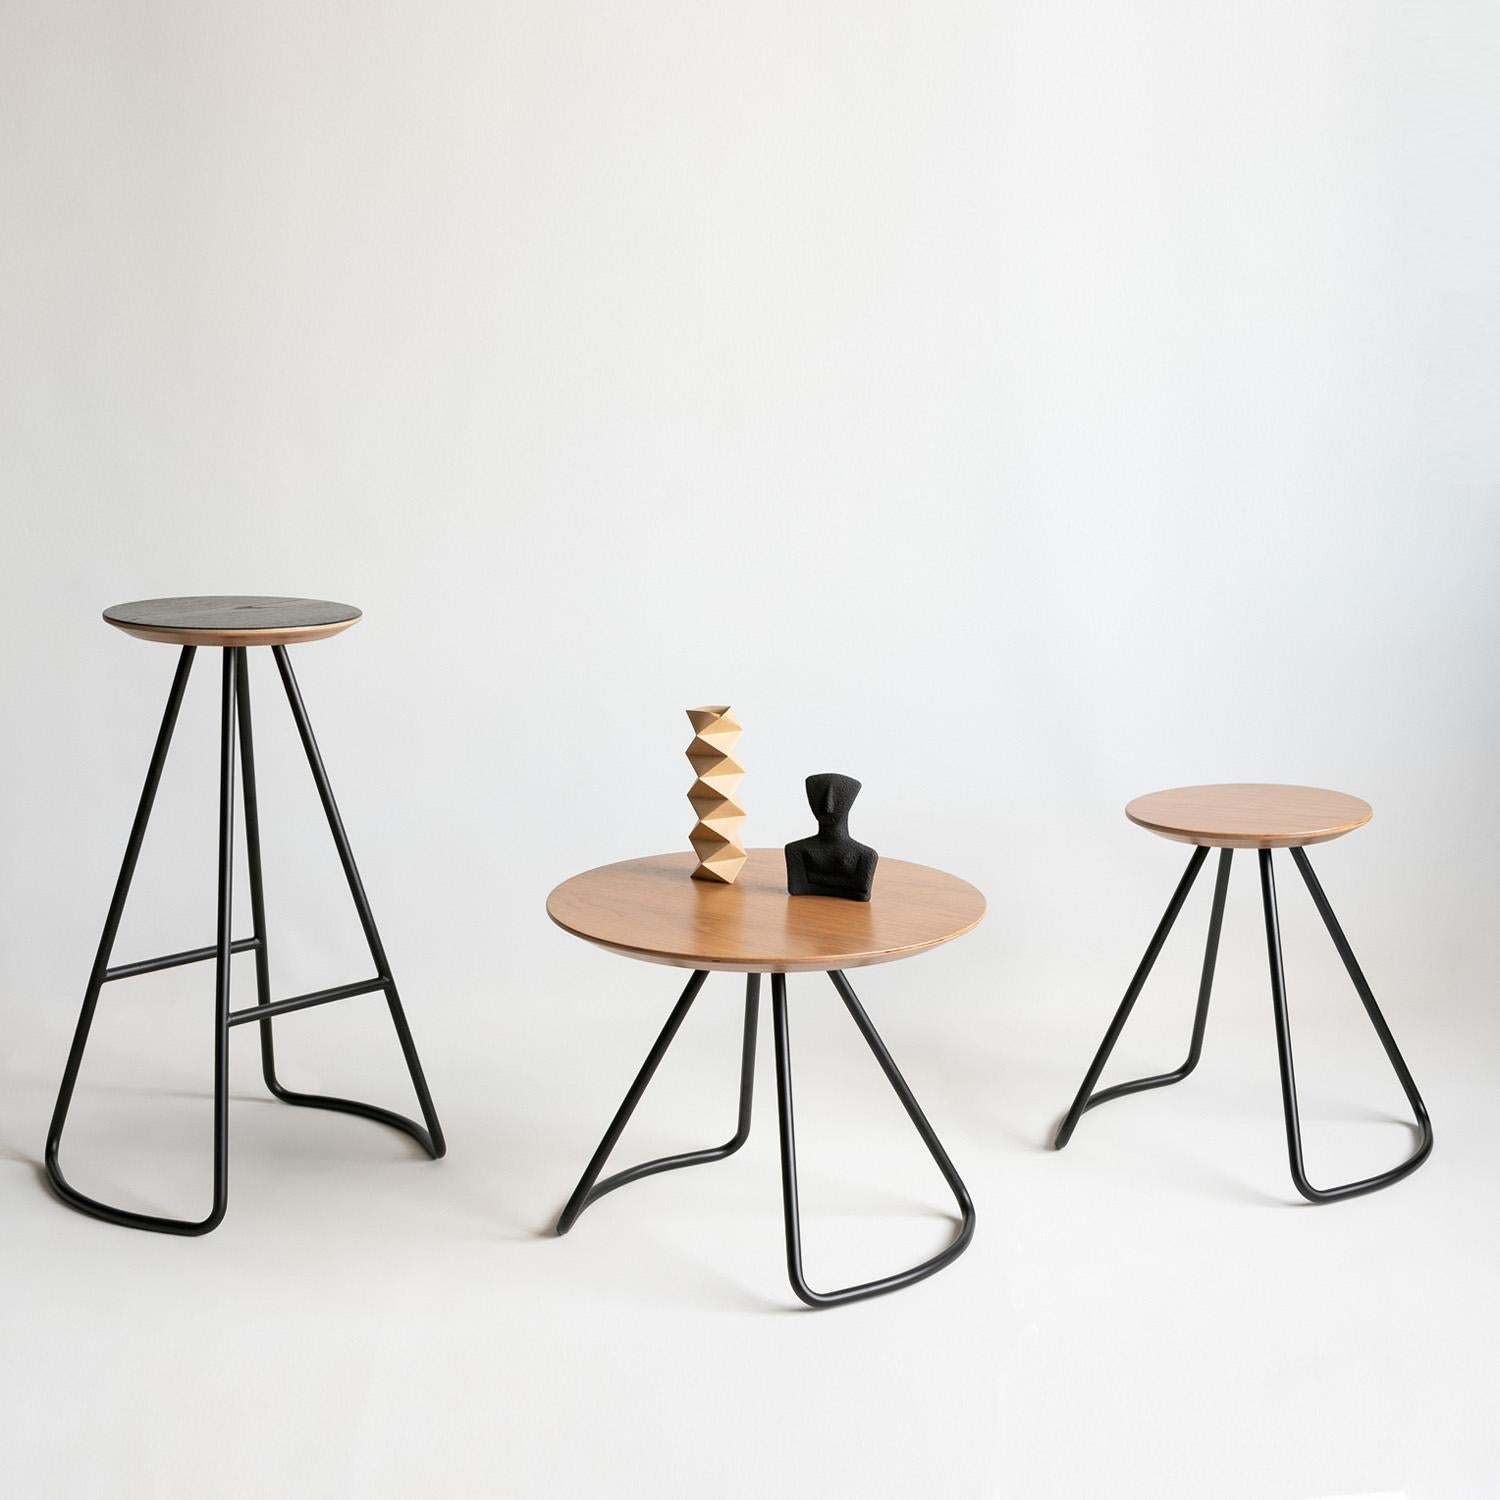 Moderne Table basse Sama, table basse moderne contemporaine et minimaliste en chêne naturel et métal noir en vente